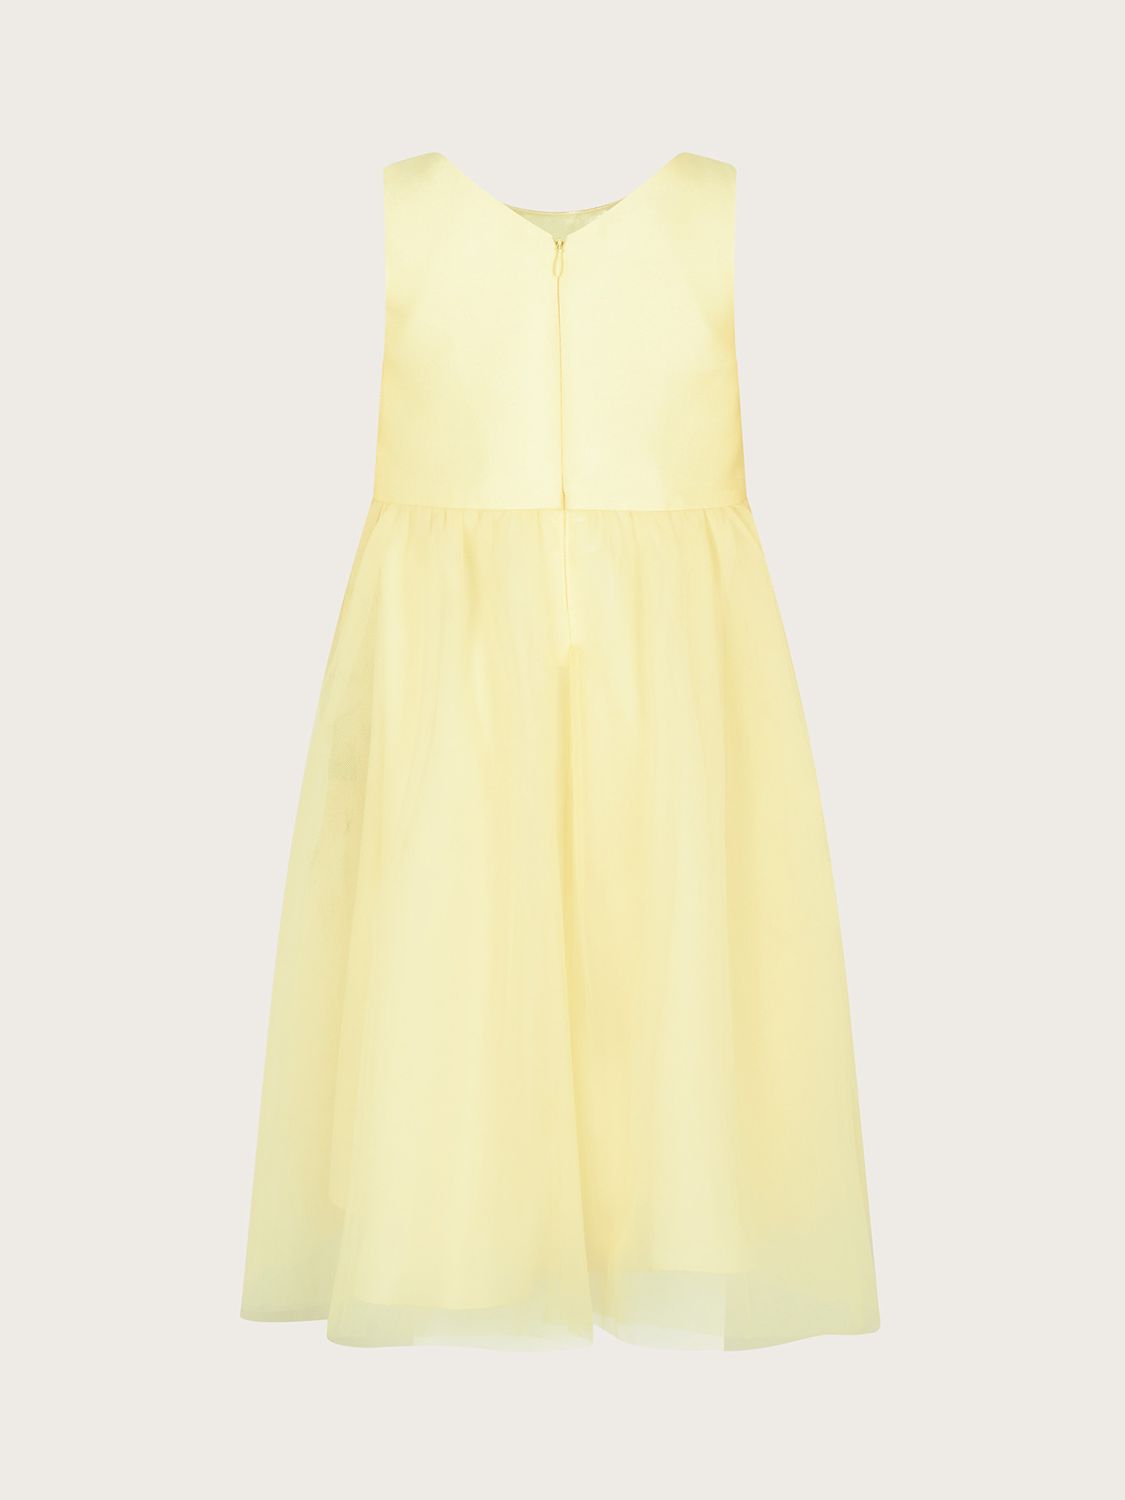 Monsoon Kids' Rose Embroidered Dress, Lemon at John Lewis & Partners